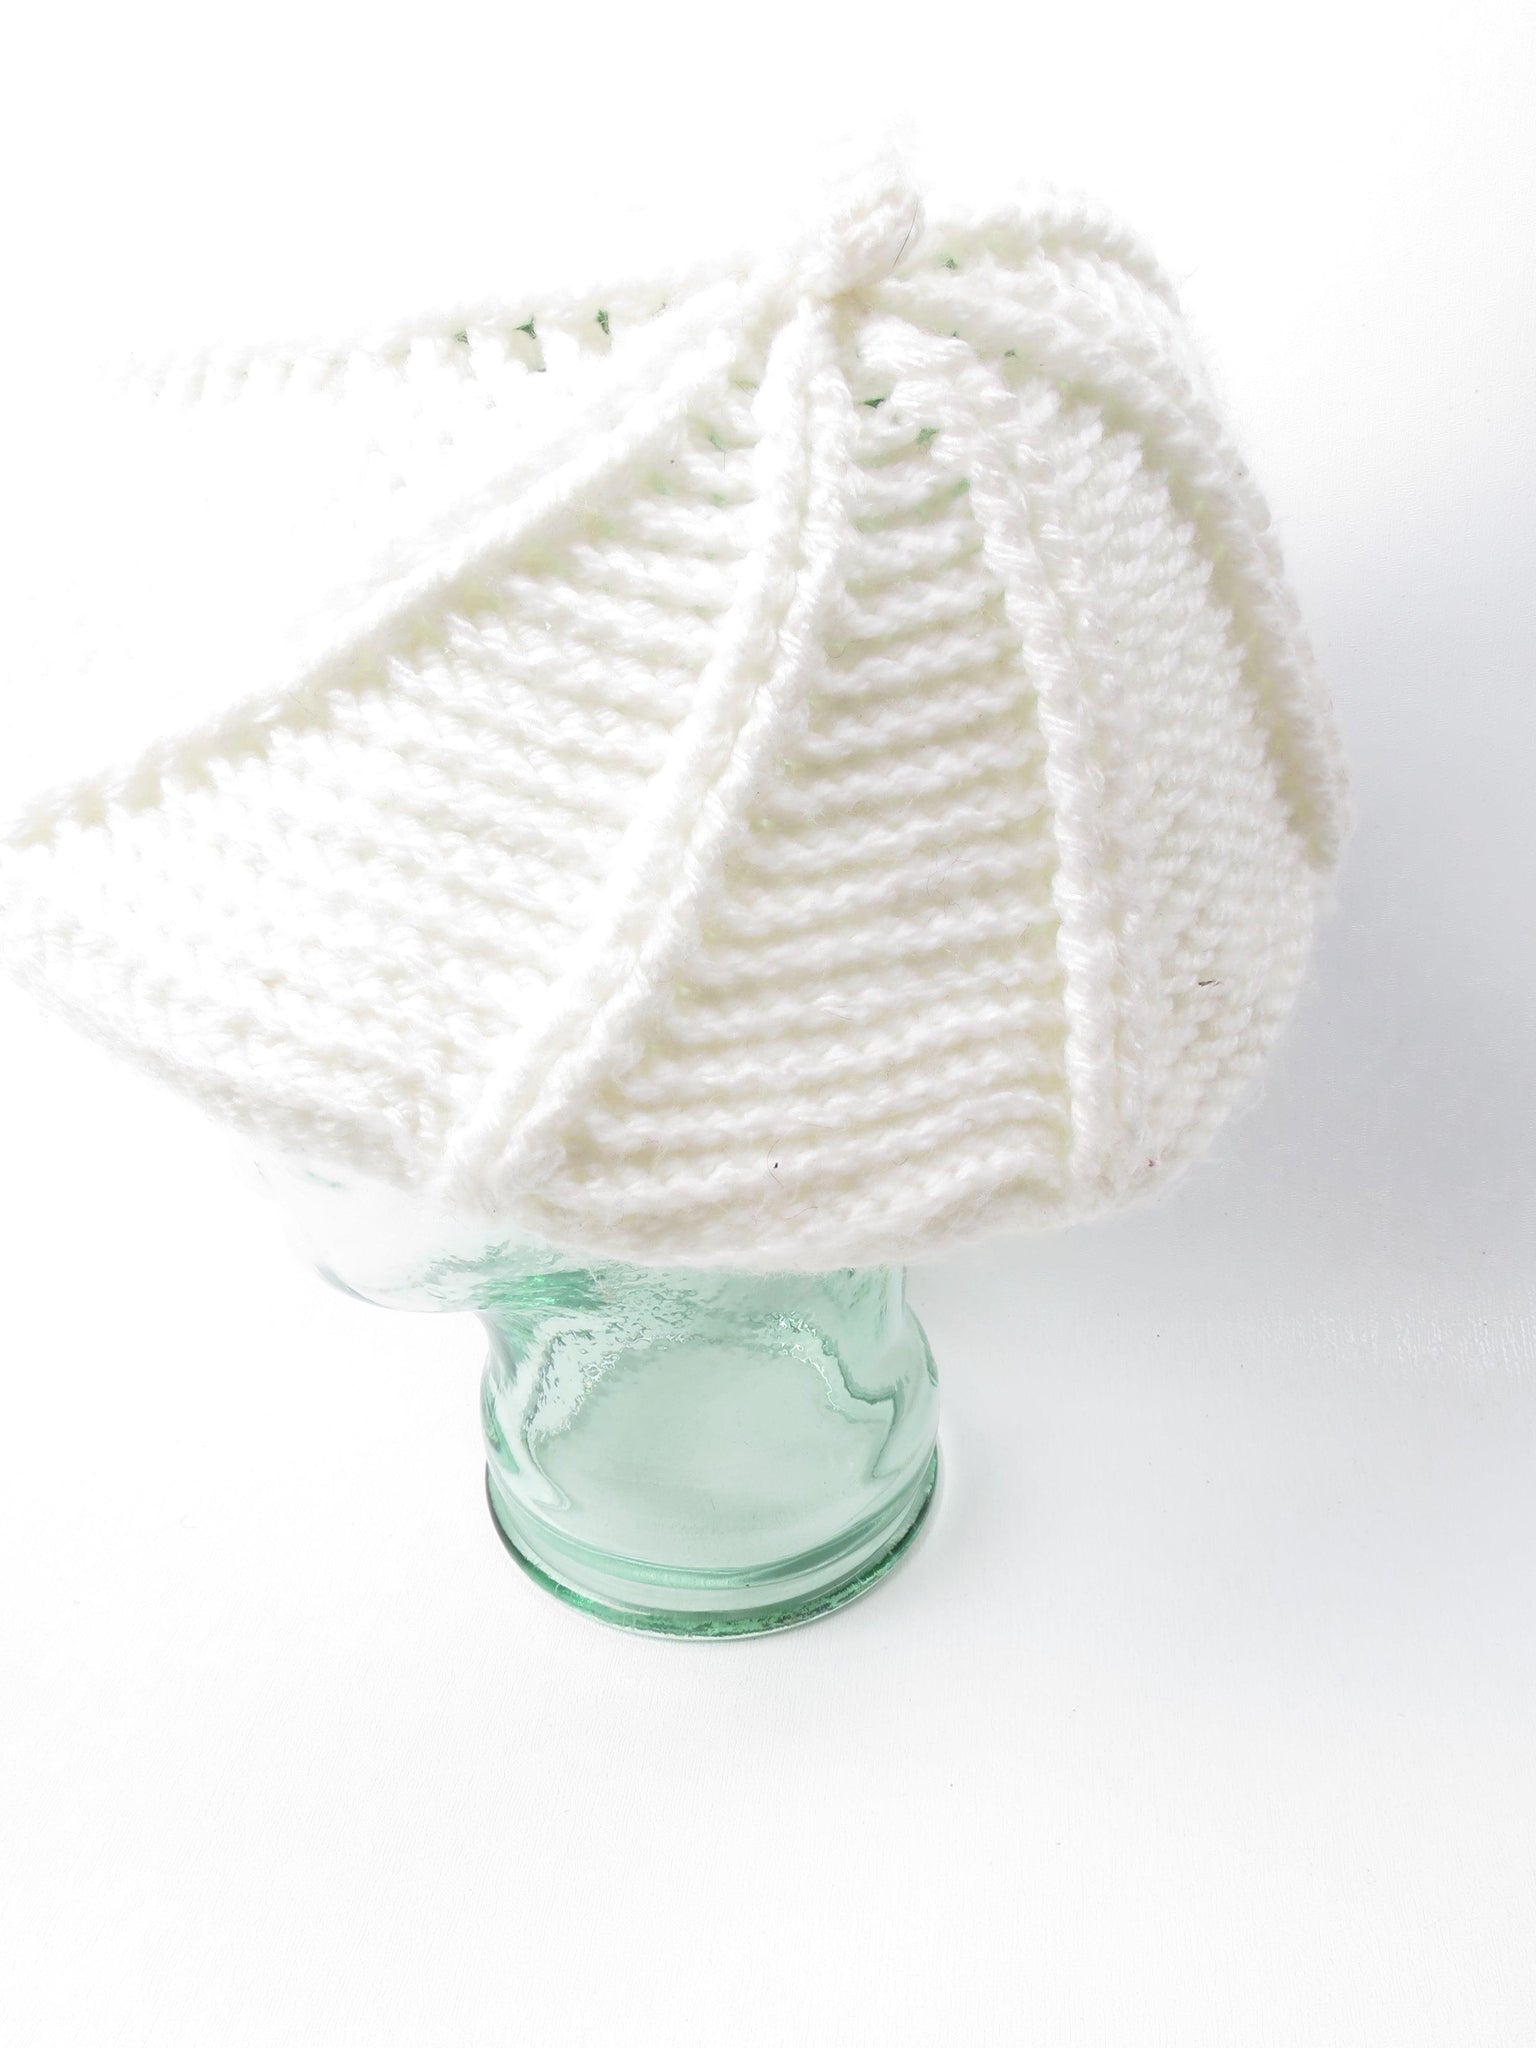 Cream Beret Vintage Knitted Crochet S/M - The Harlequin